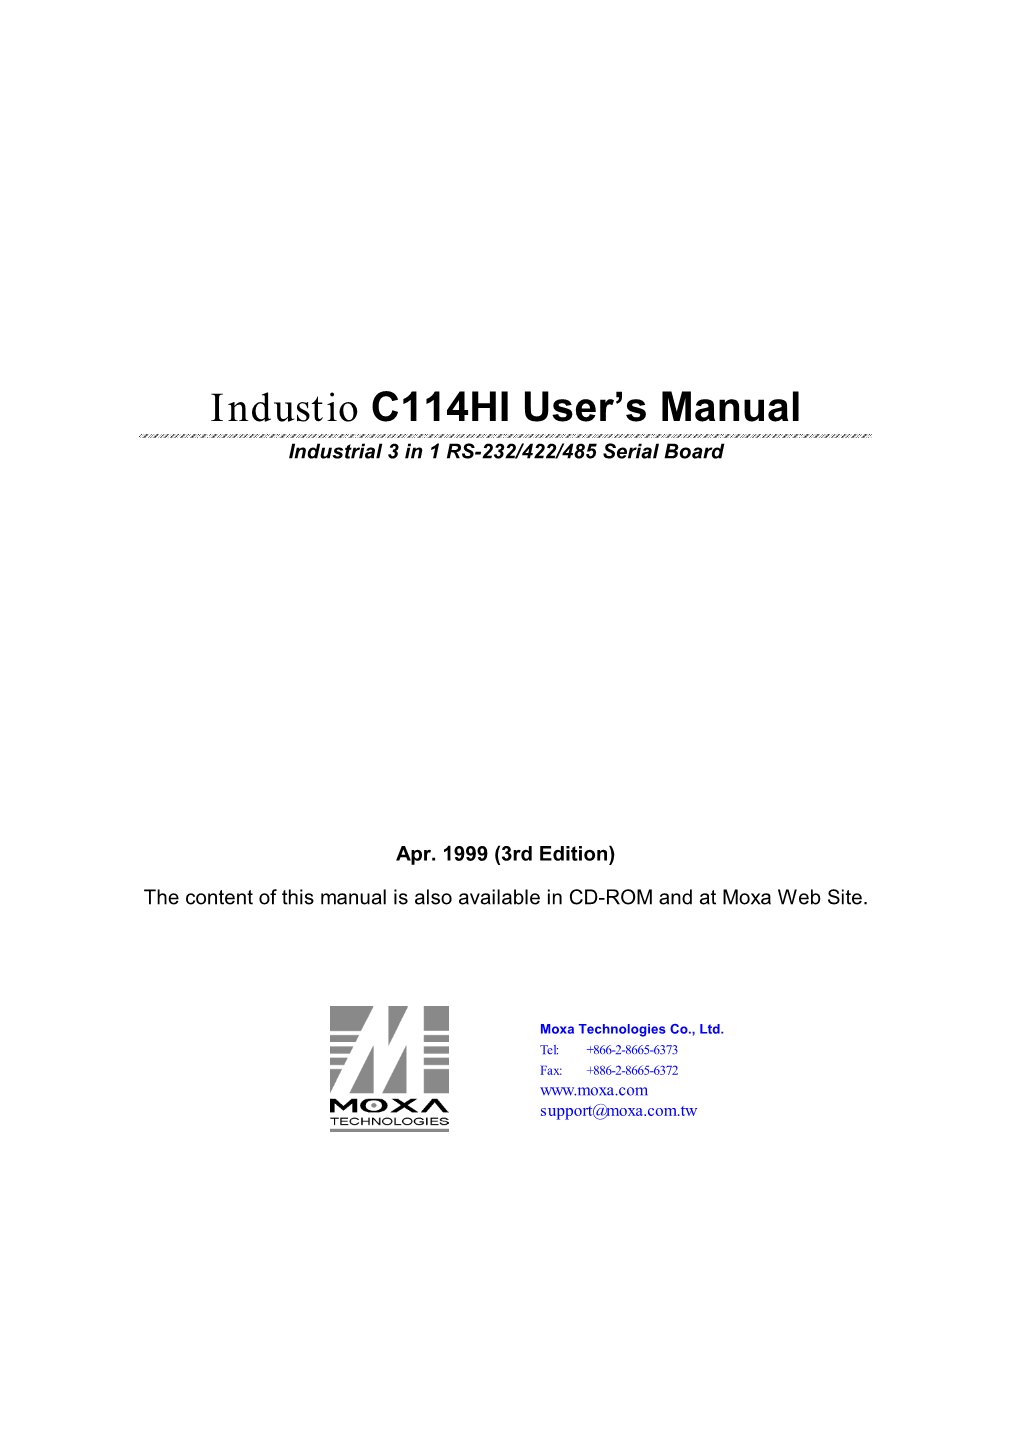 Industio C114HI User's Manual 1-1